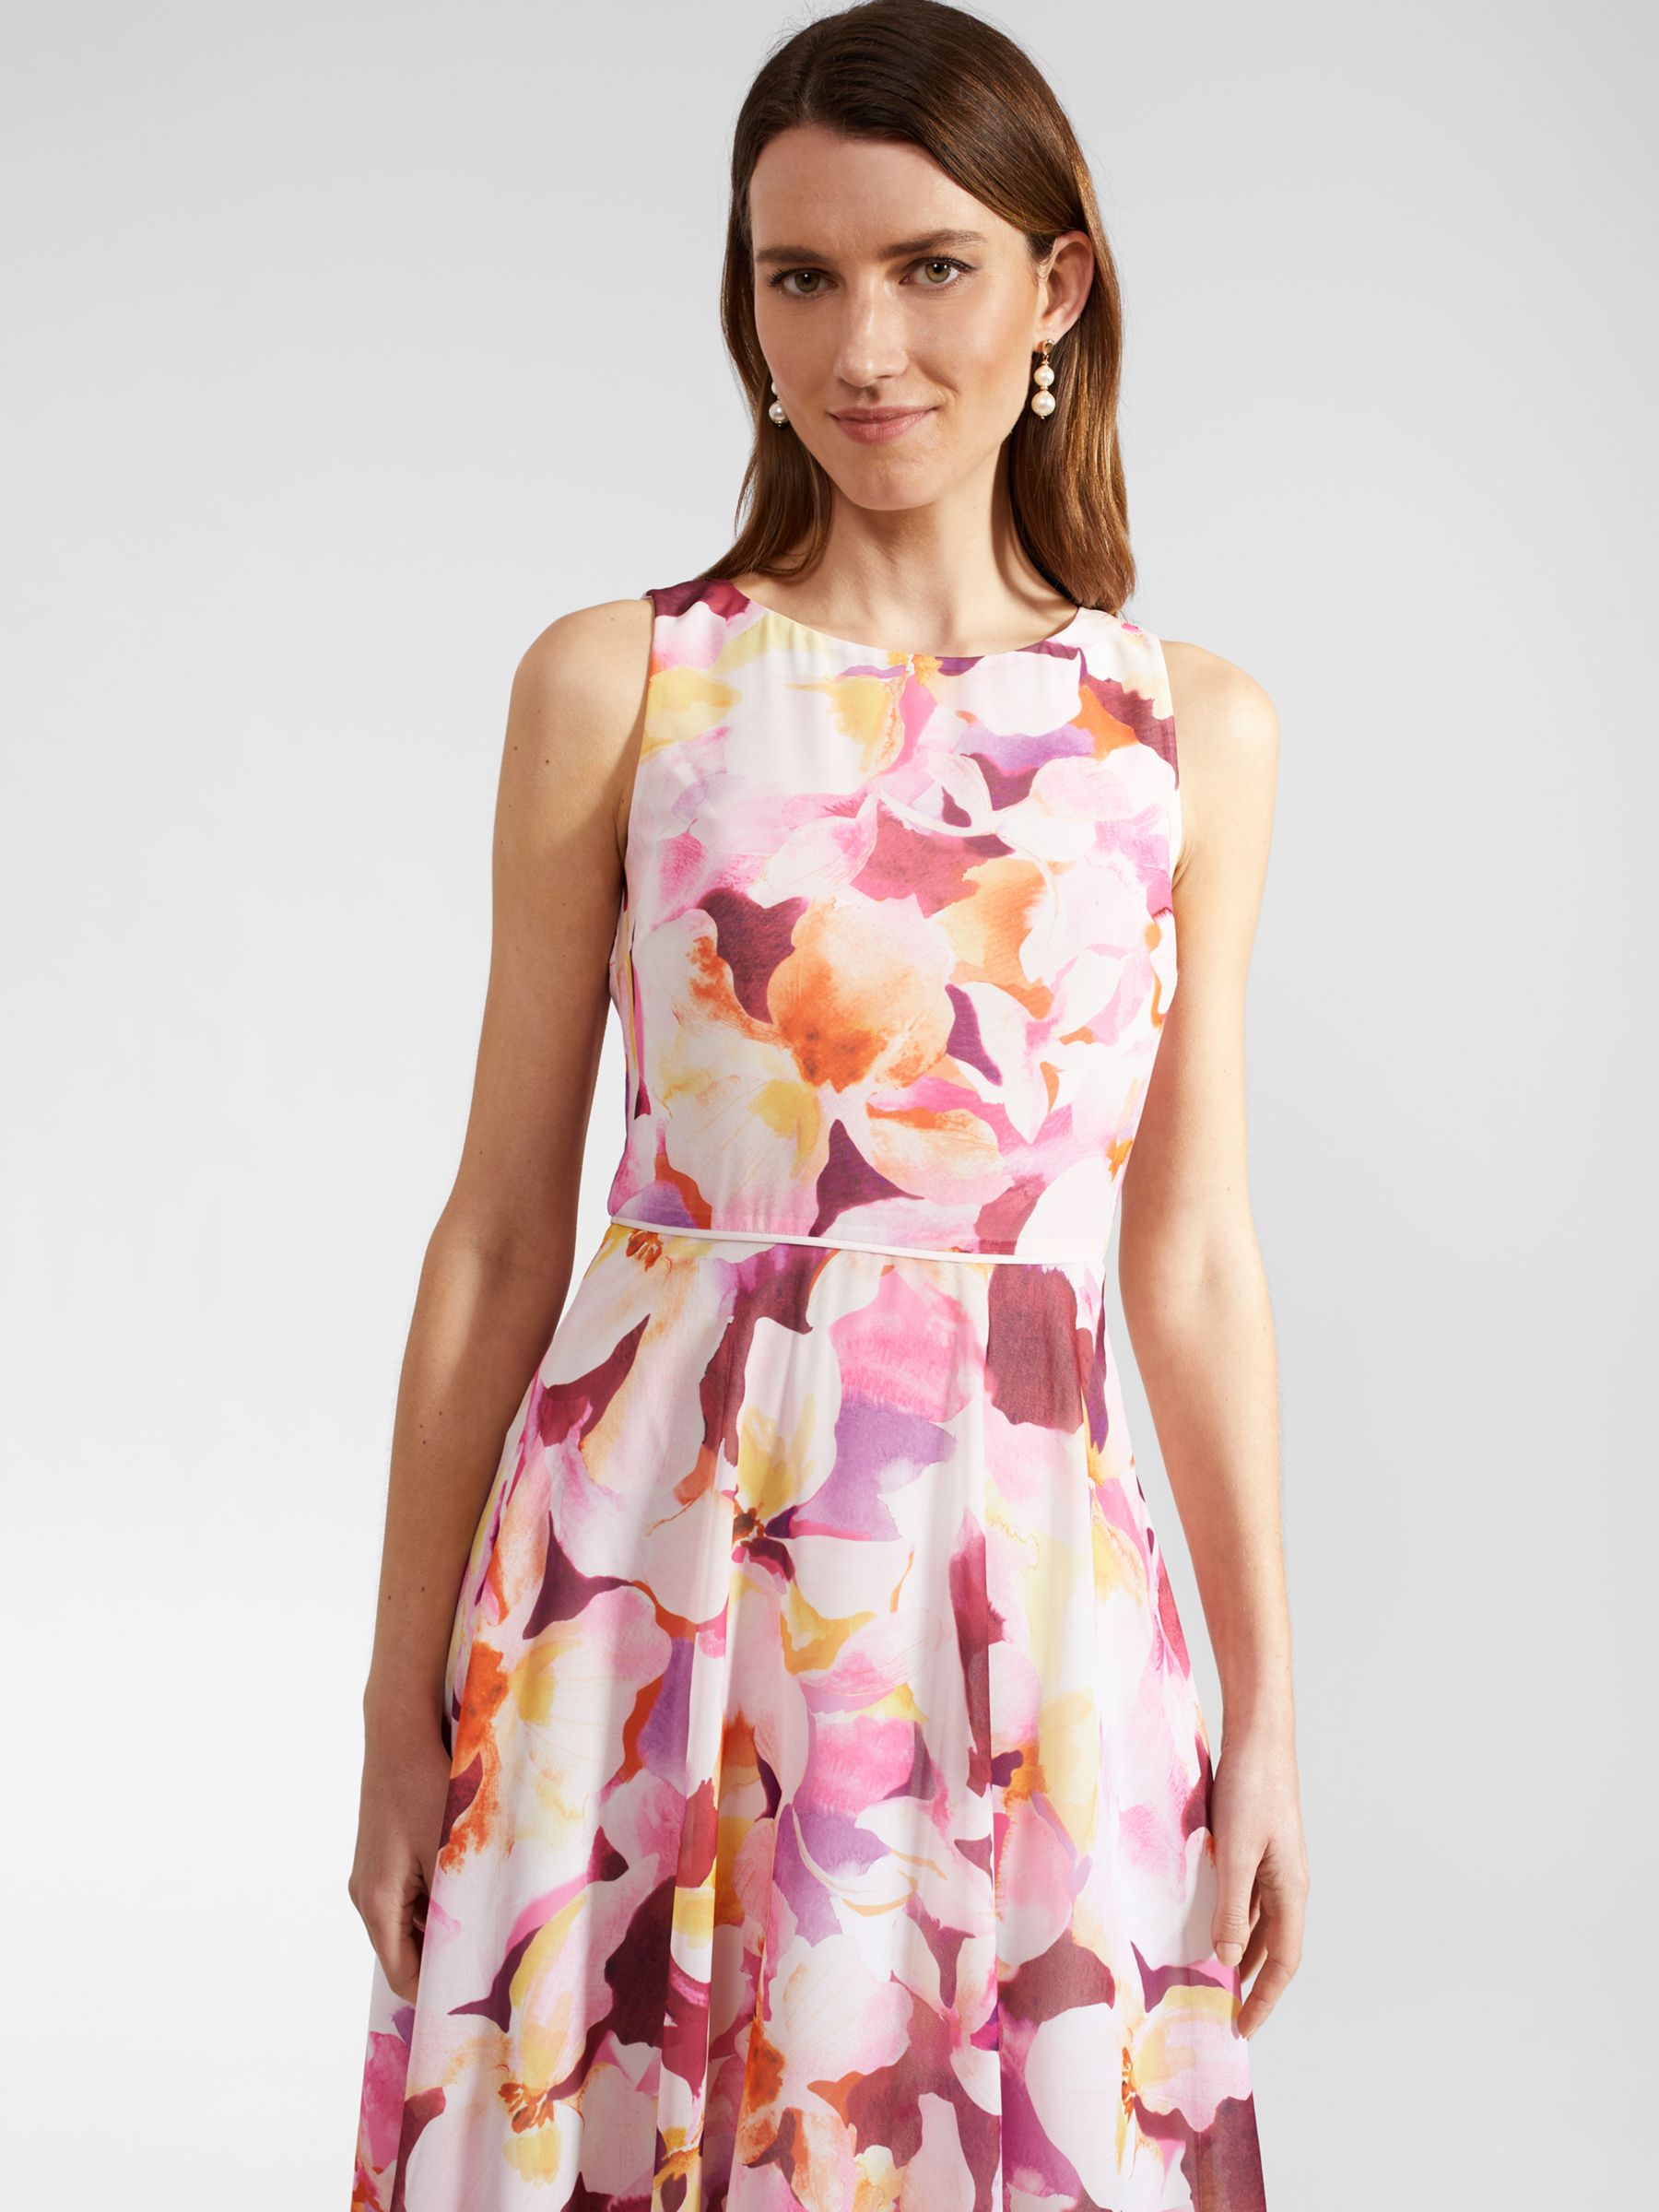 Hobbs Carly Floral Midi Dress, Pink/Multi, 10